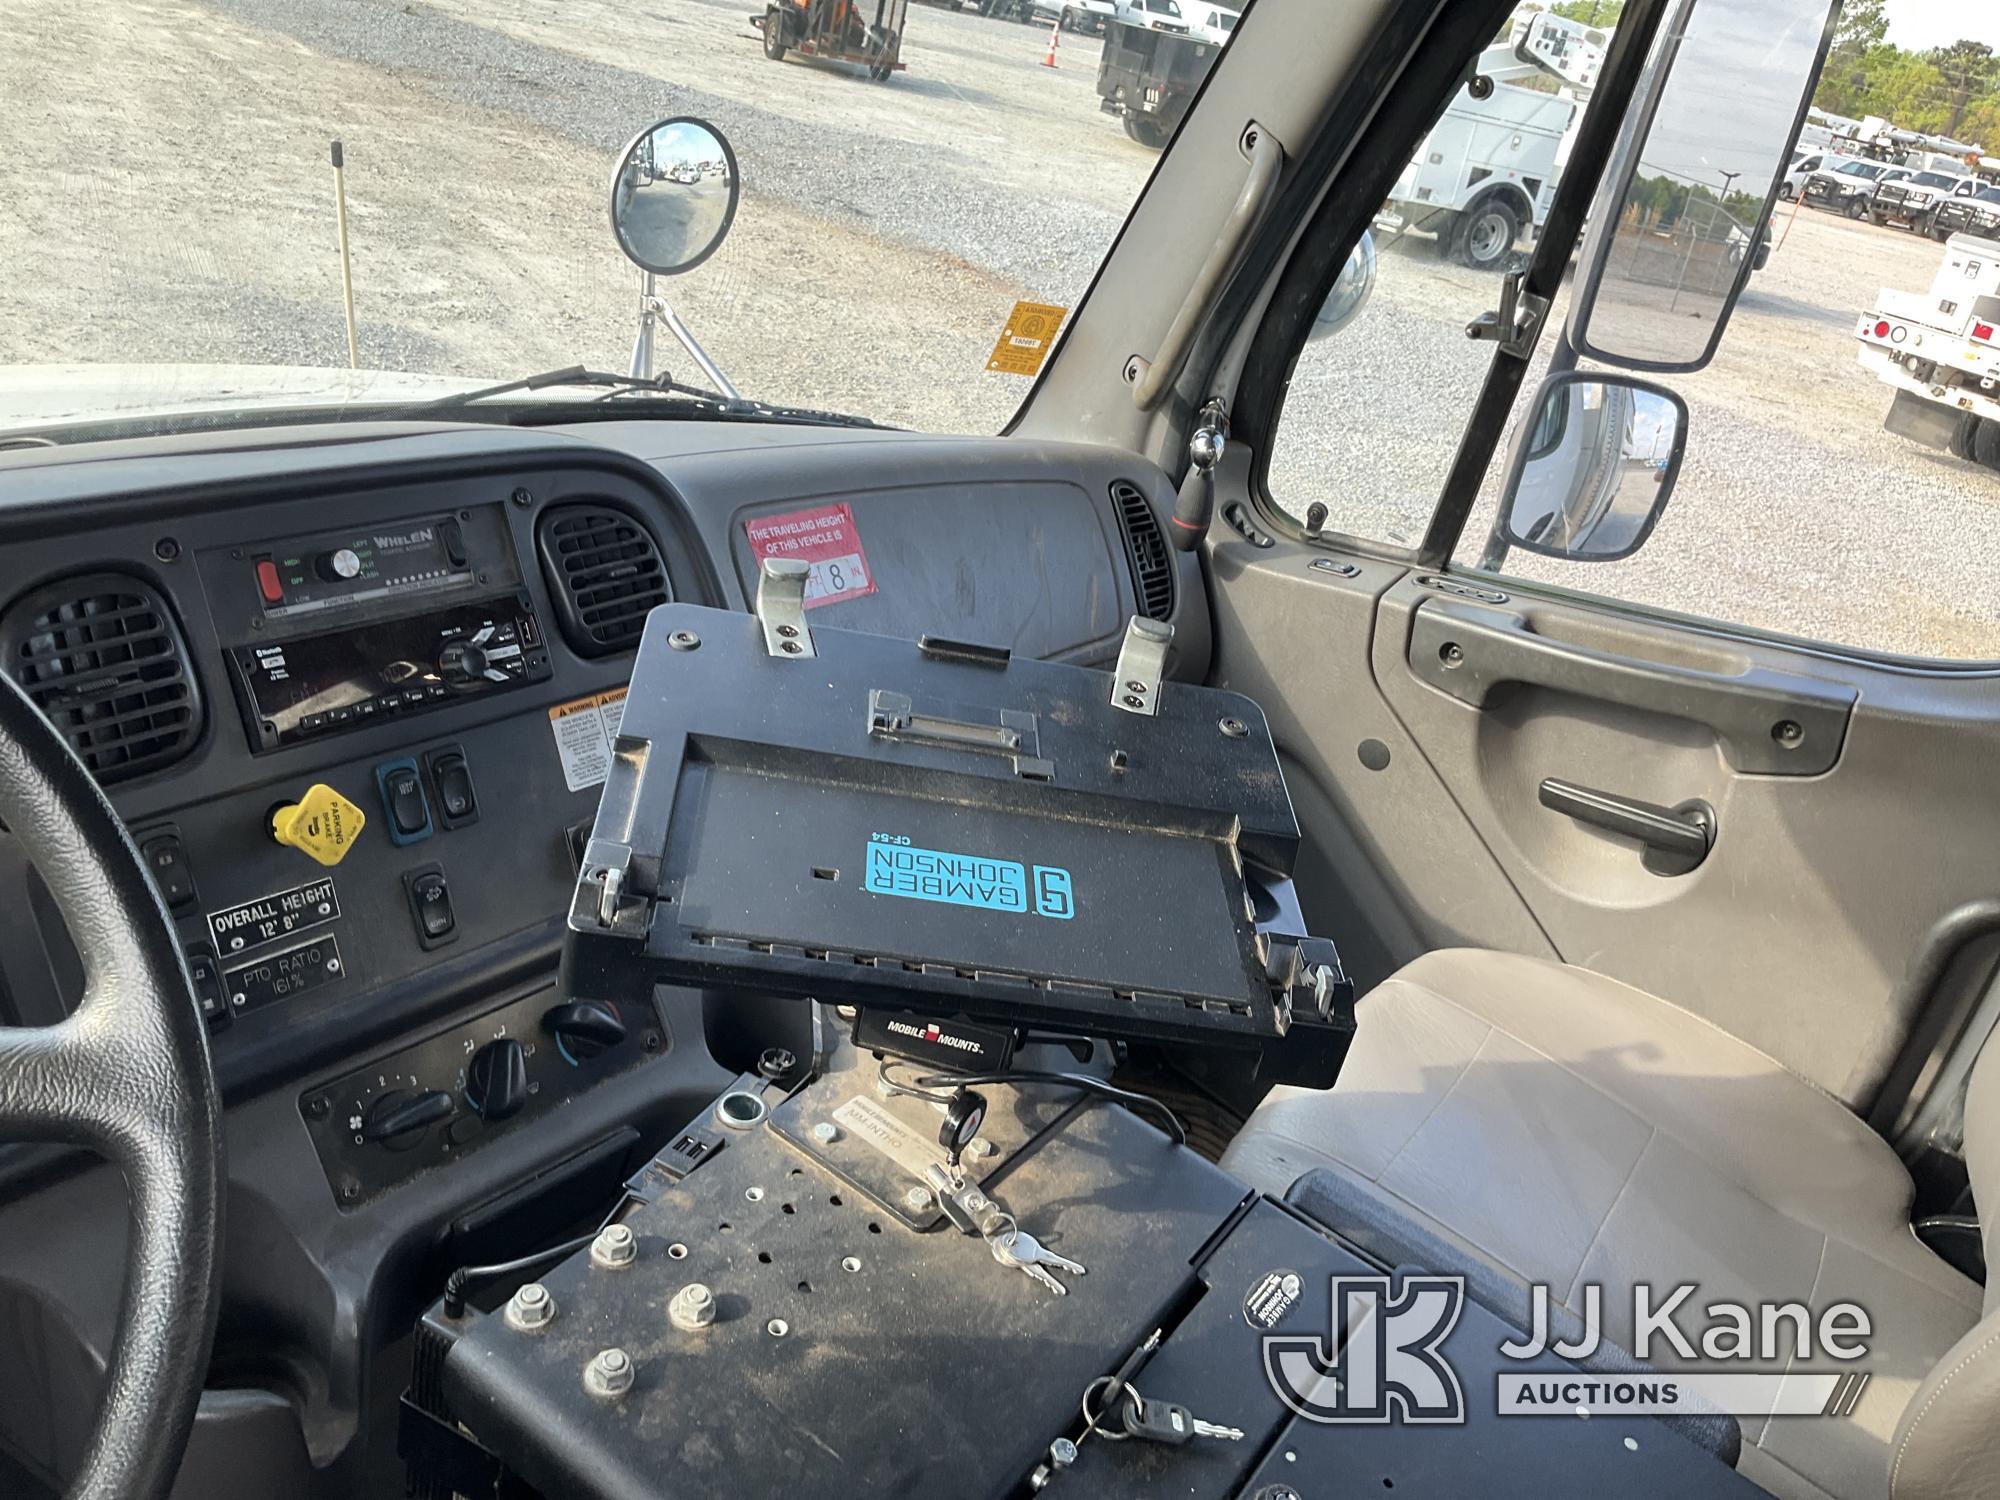 (Villa Rica, GA) Altec TA45P, Articulating & Telescopic Bucket Truck mounted behind cab on 2018 Frei